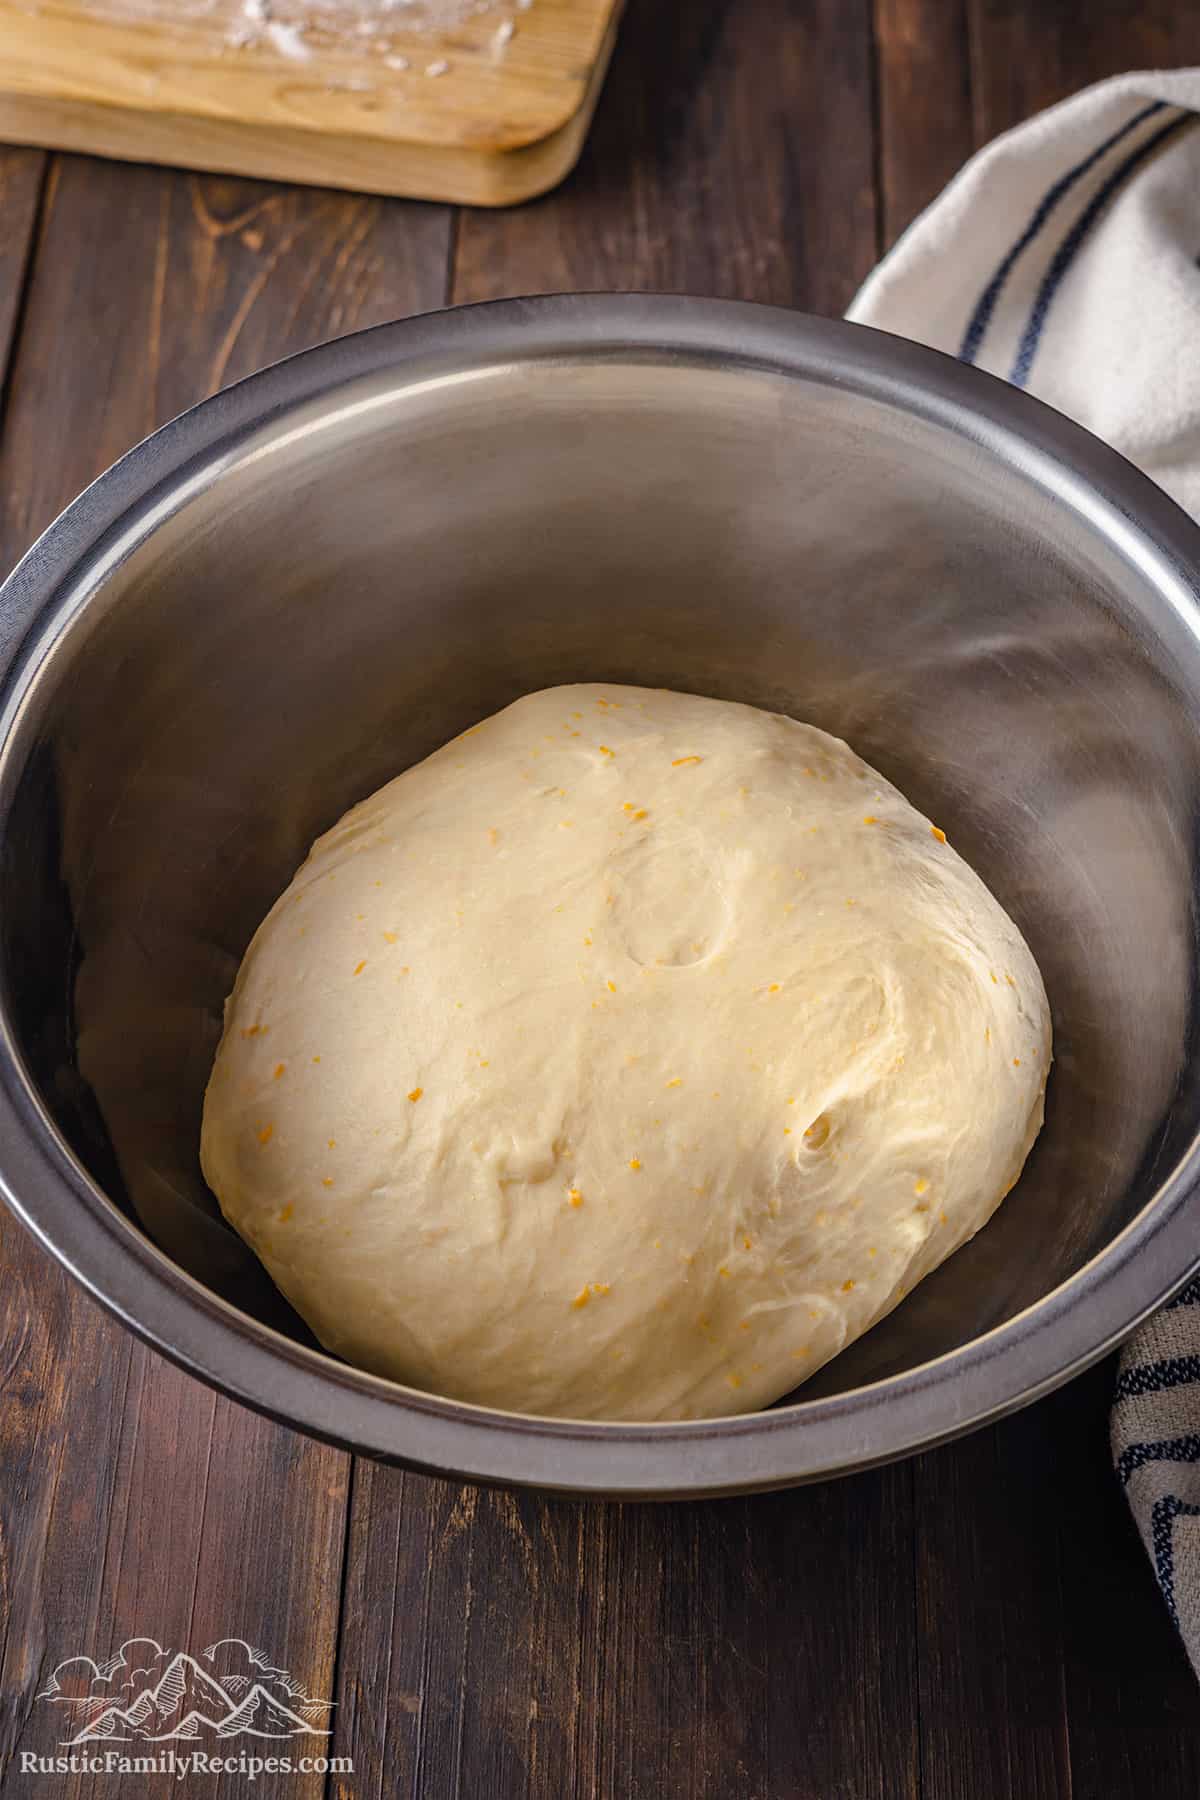 Pan de muerto dough in a bowl, before rising.